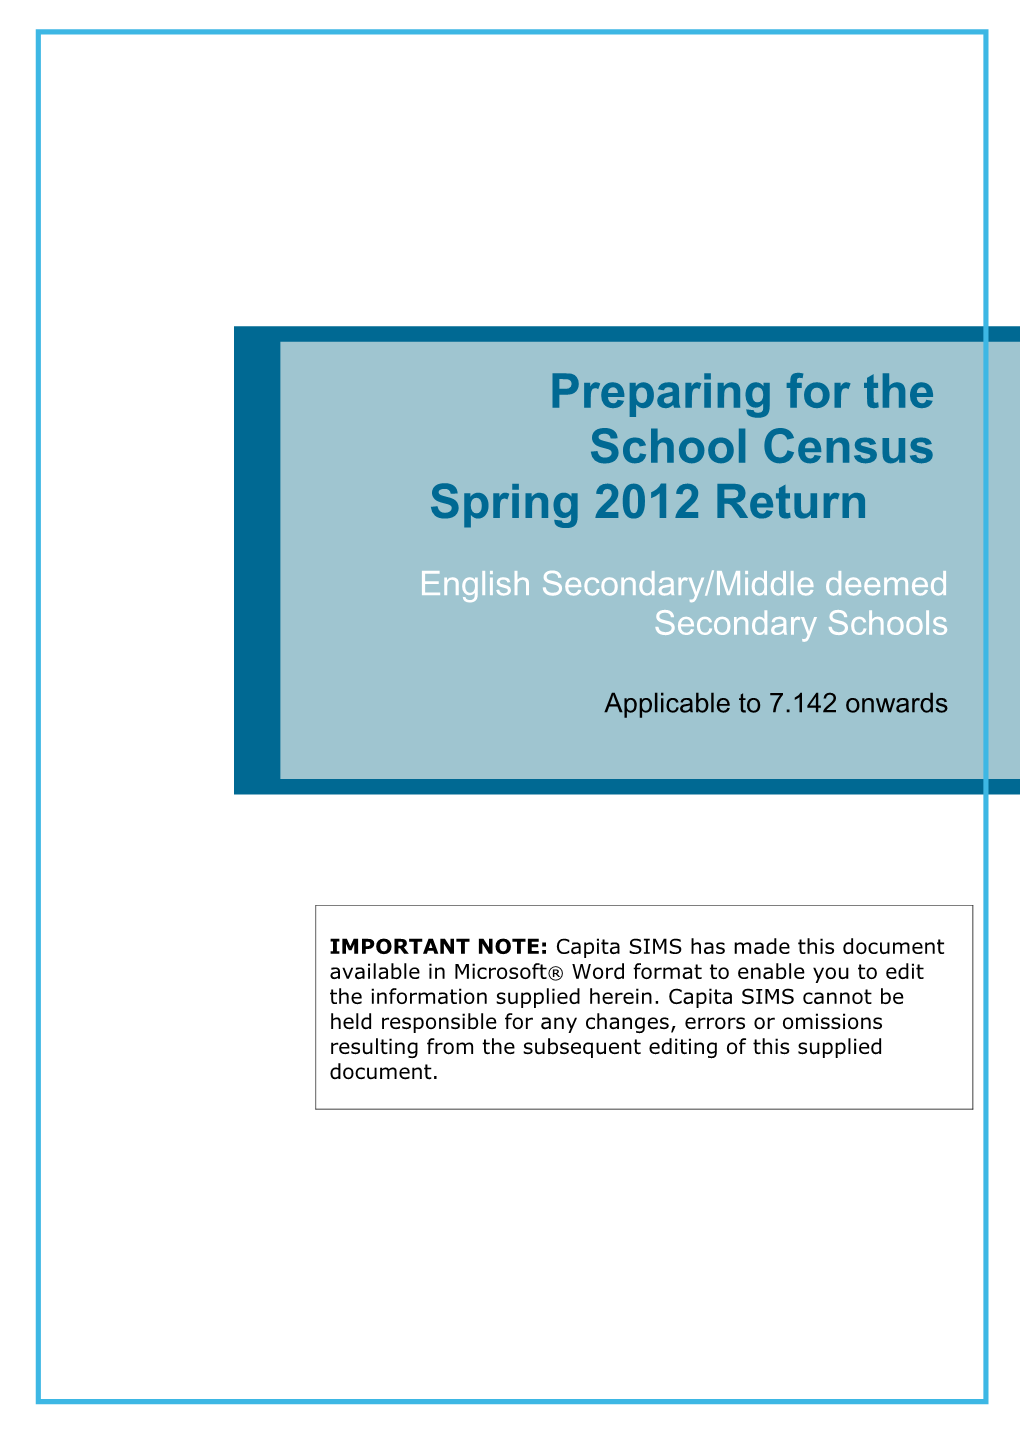 Preparation for the School Census Spring 2012 Return